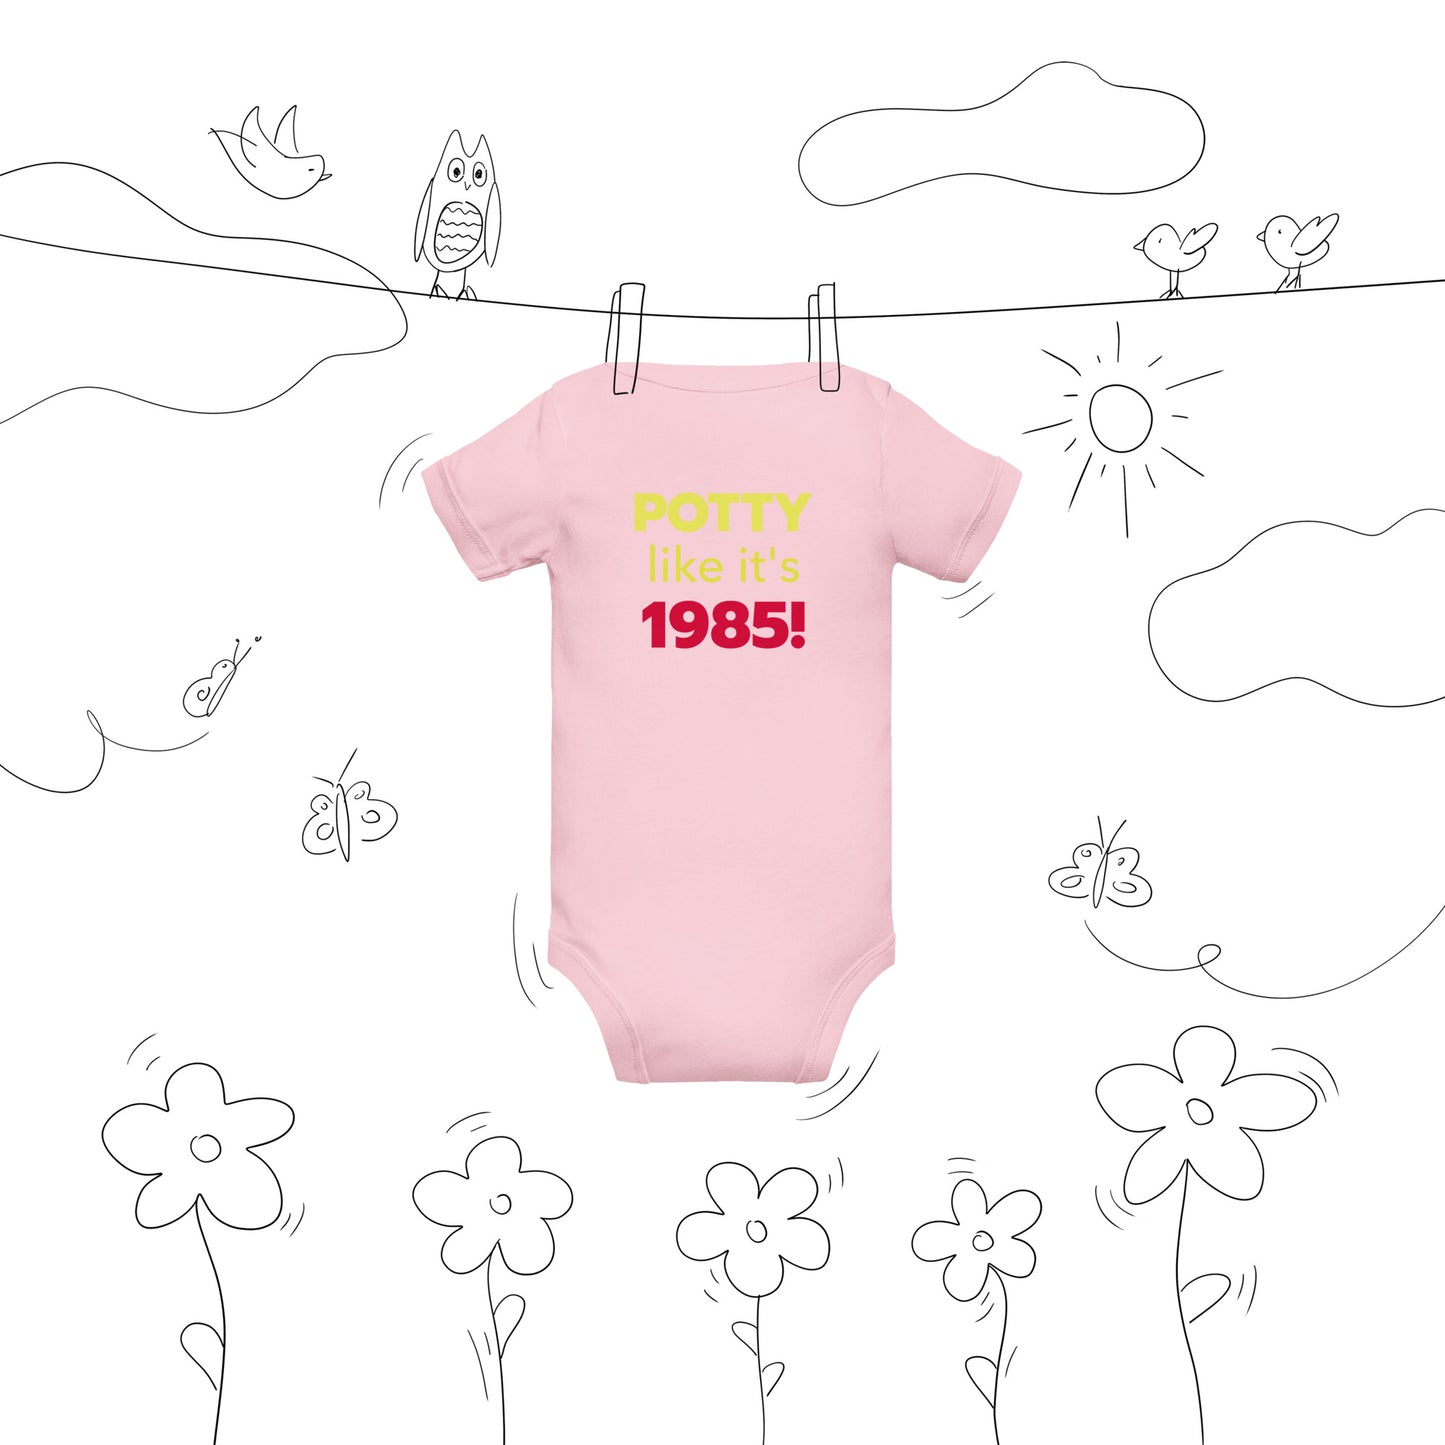 The 1985 Baby Short Sleeve Onesie